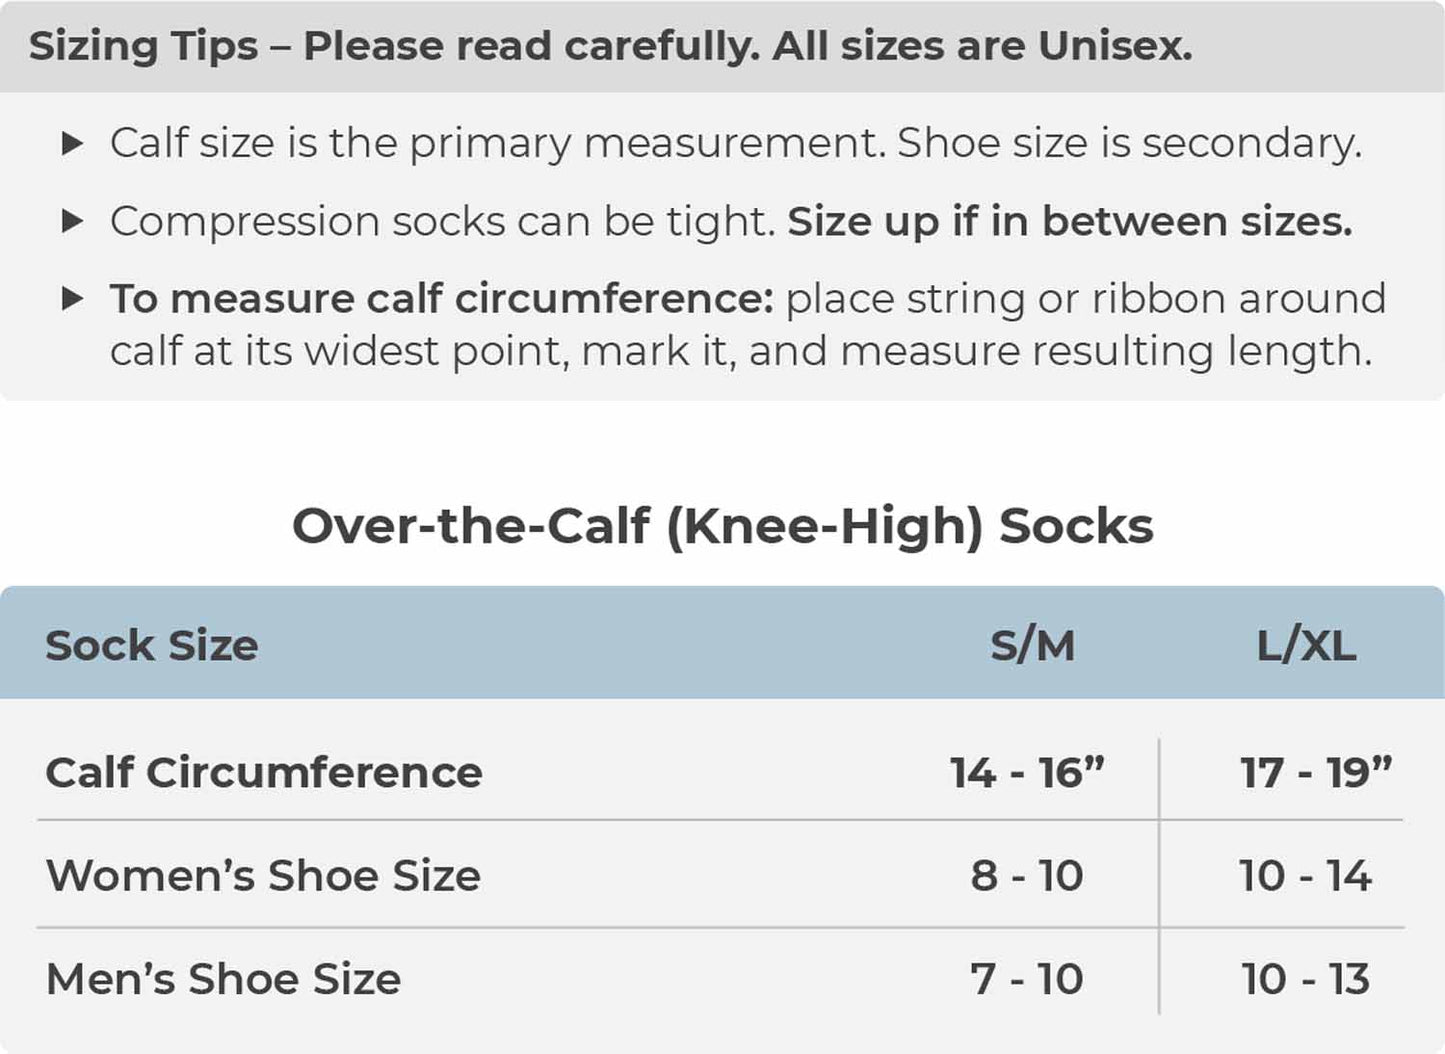 Seattle Seahawks NFL Adult Compression Socks - Lime Green